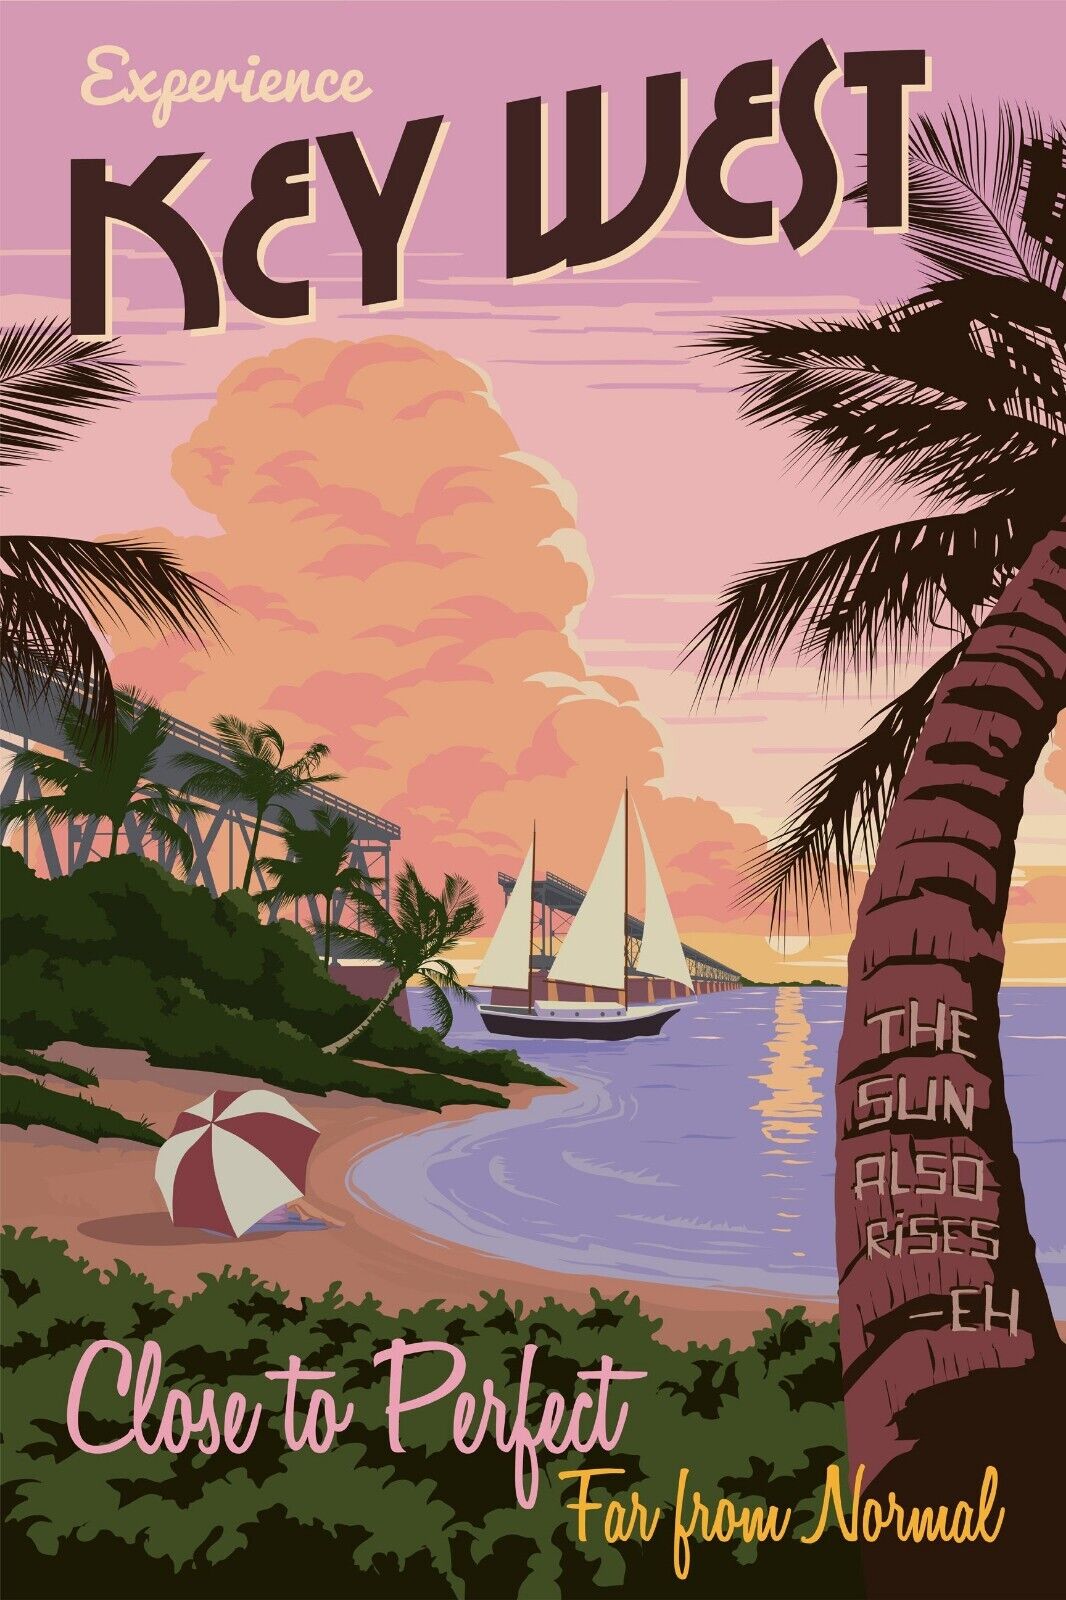 Key West Fl Vintage Postcards 1930s Retro Original Travel Poster Art Set Of 6